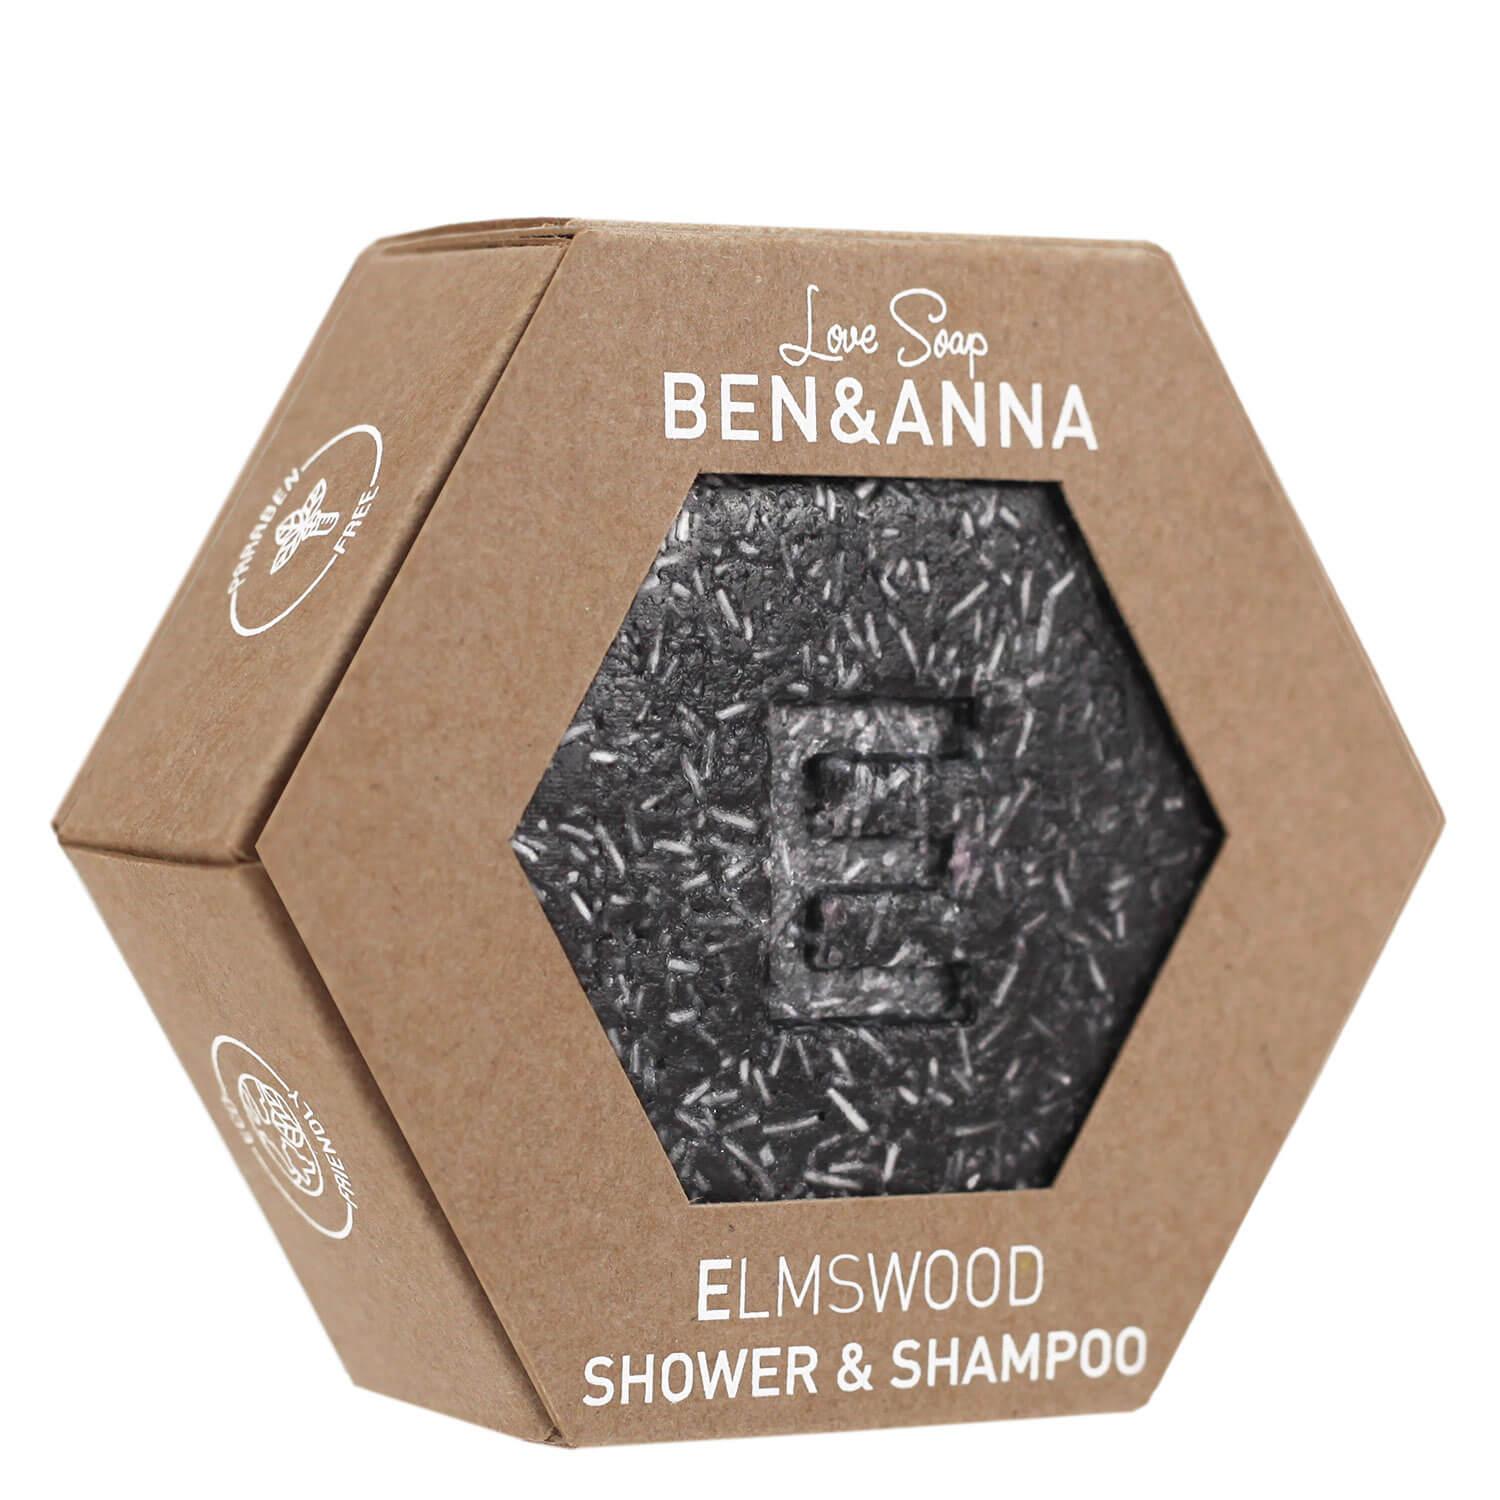 BEN&ANNA - Elmswood Shower & Shampoo